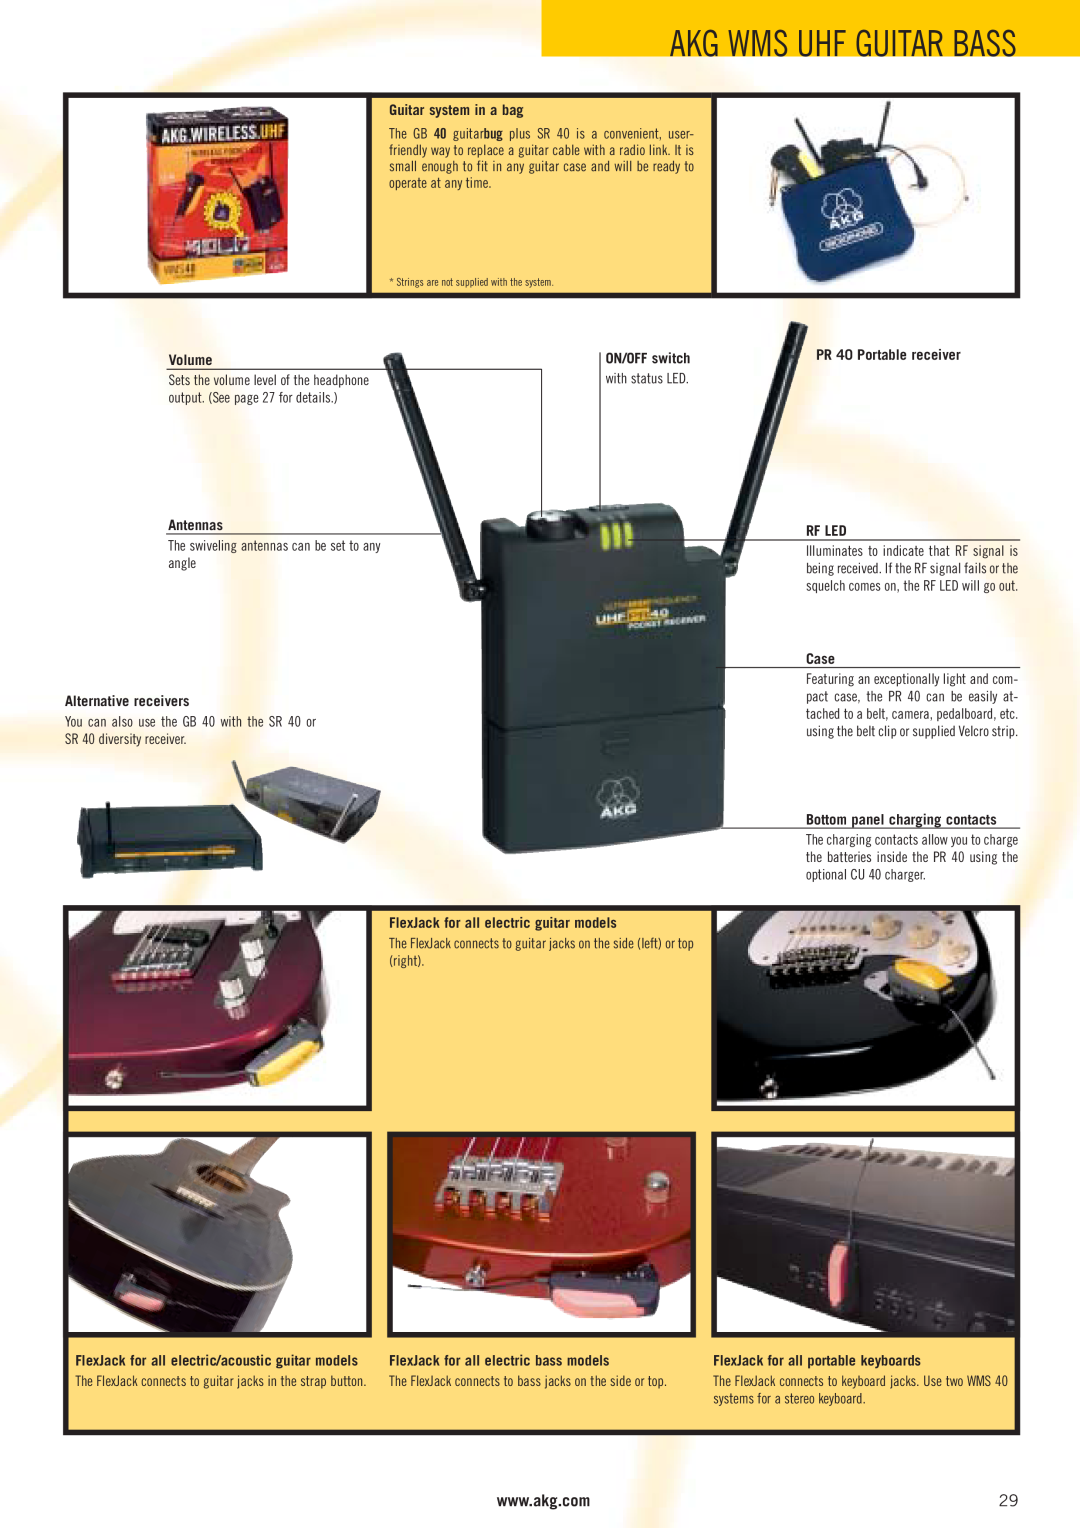 AKG Acoustics WMS 40 Akg Wms Uhf Guitar Bass, Guitar system in a bag, Volume, Antennas, Alternative receivers, Rf Led 